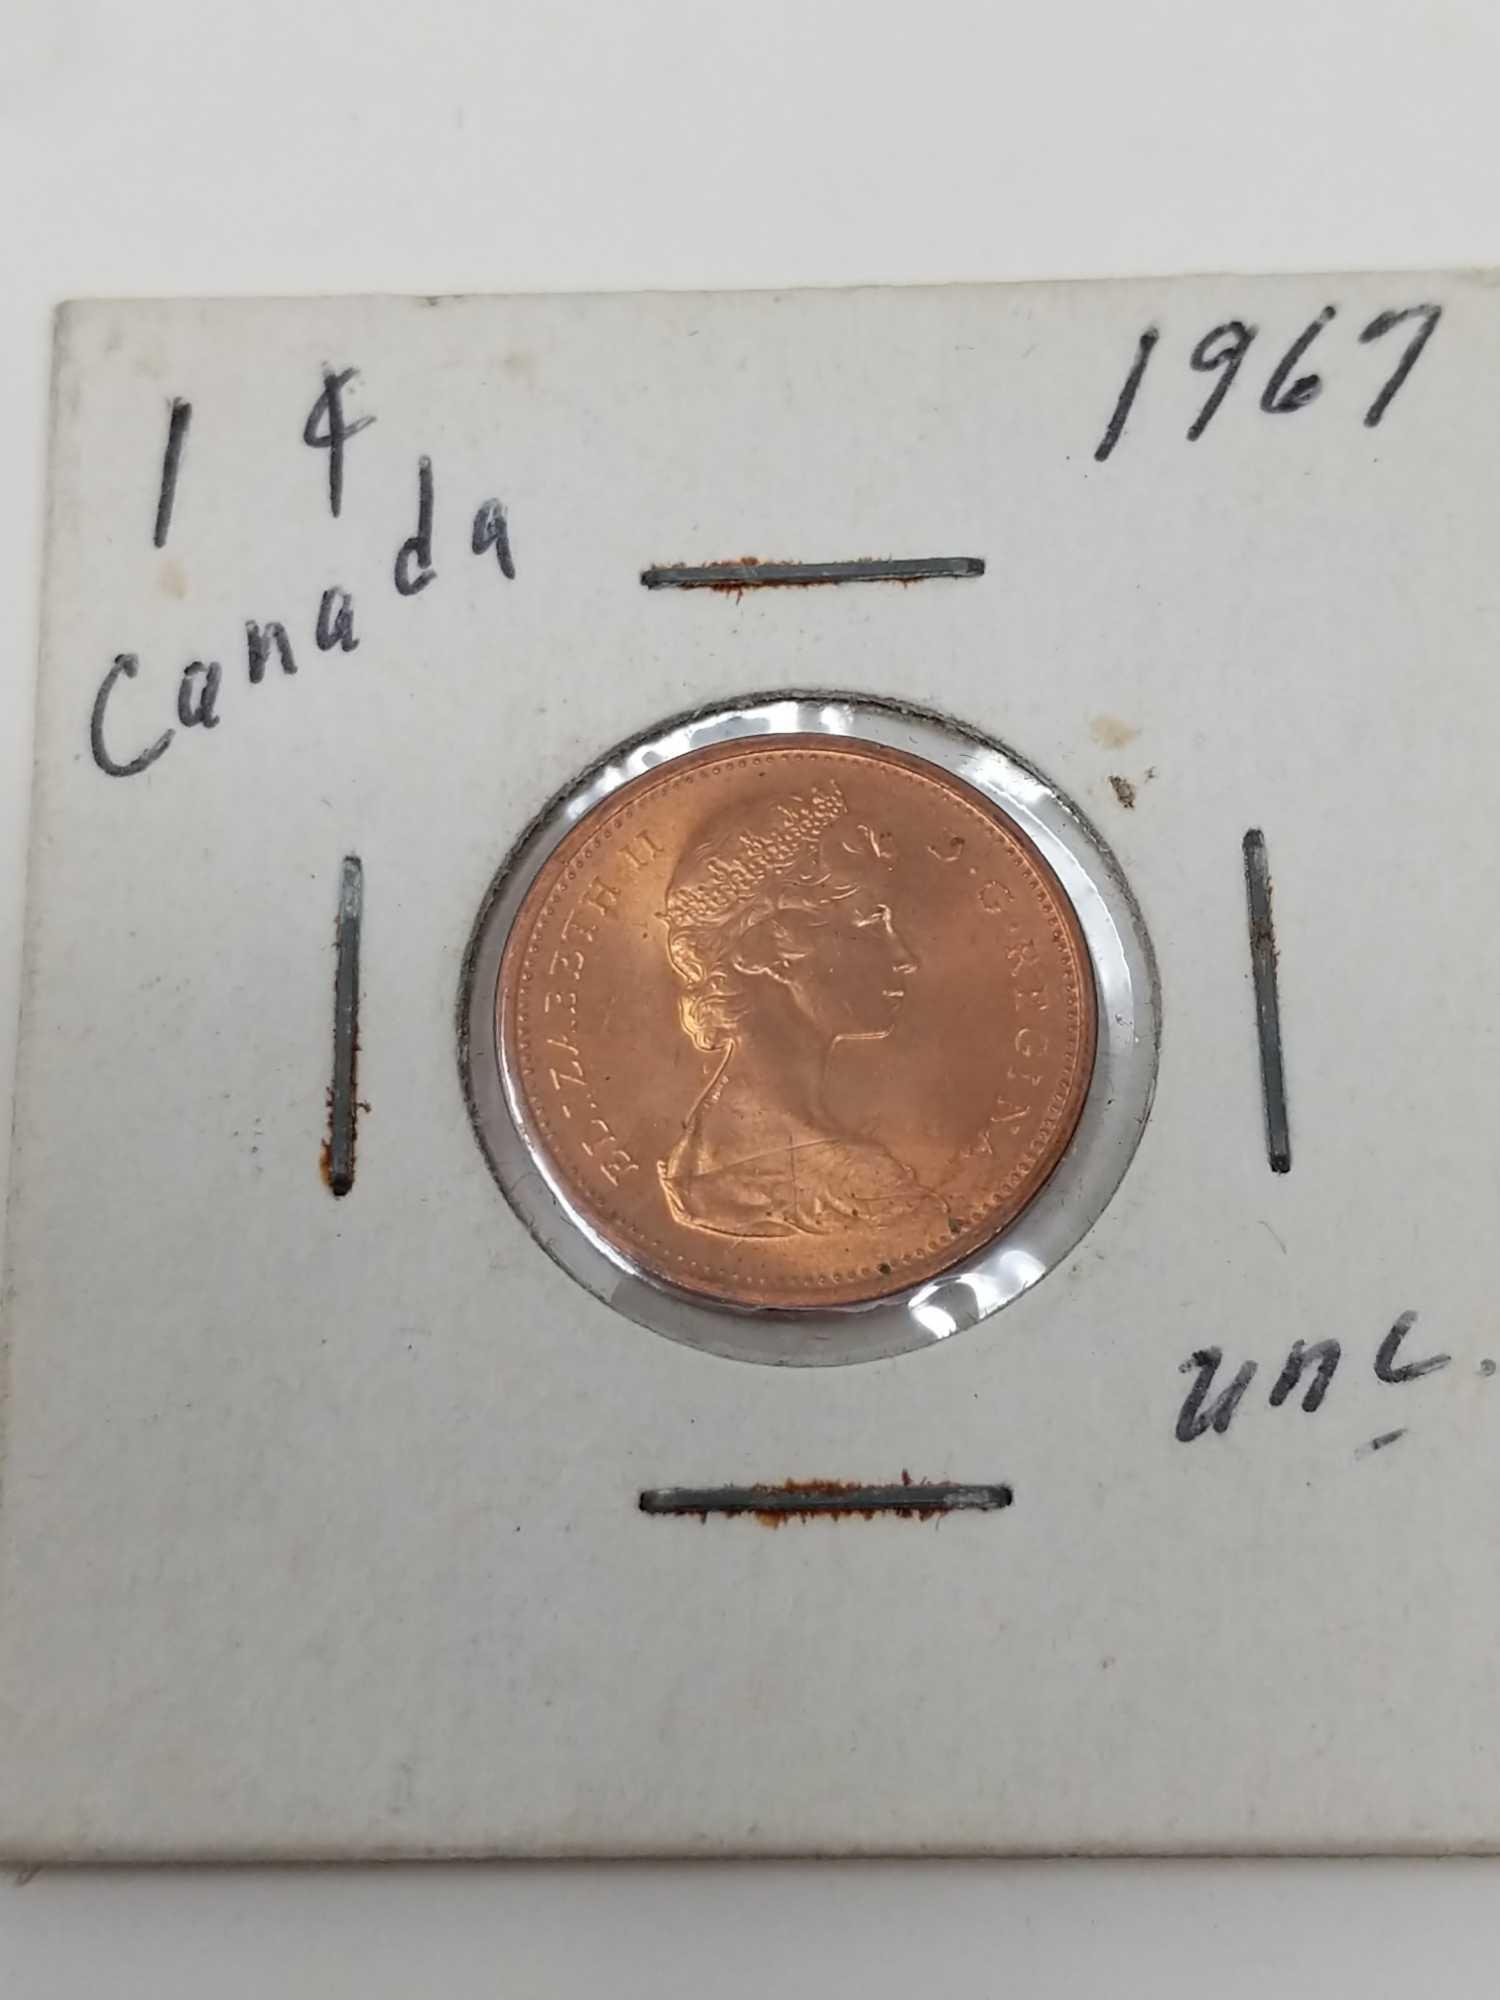 $1 Canadian Notes: 1954 Circ., 1967 Crisp UNC, 1967 BU Year Set, 95 Cents Silver